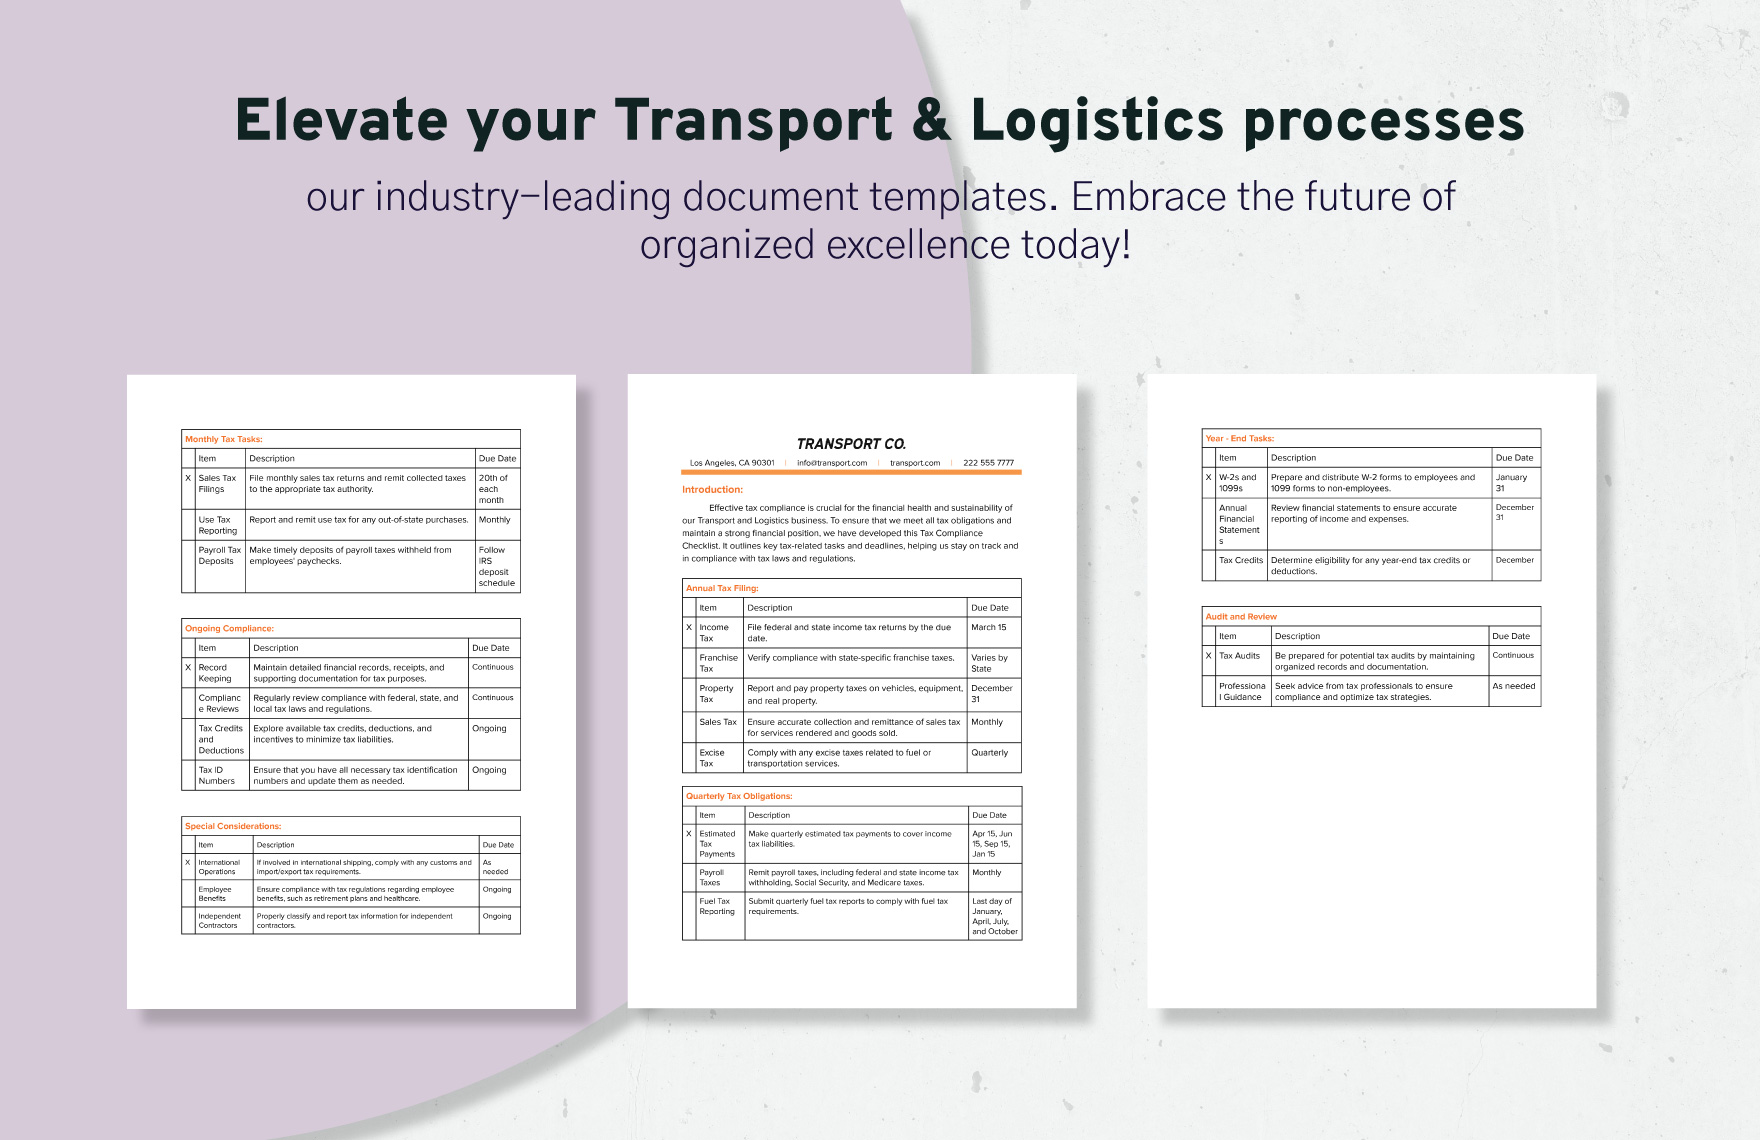 Transport and Logistics Tax Compliance Checklist Template